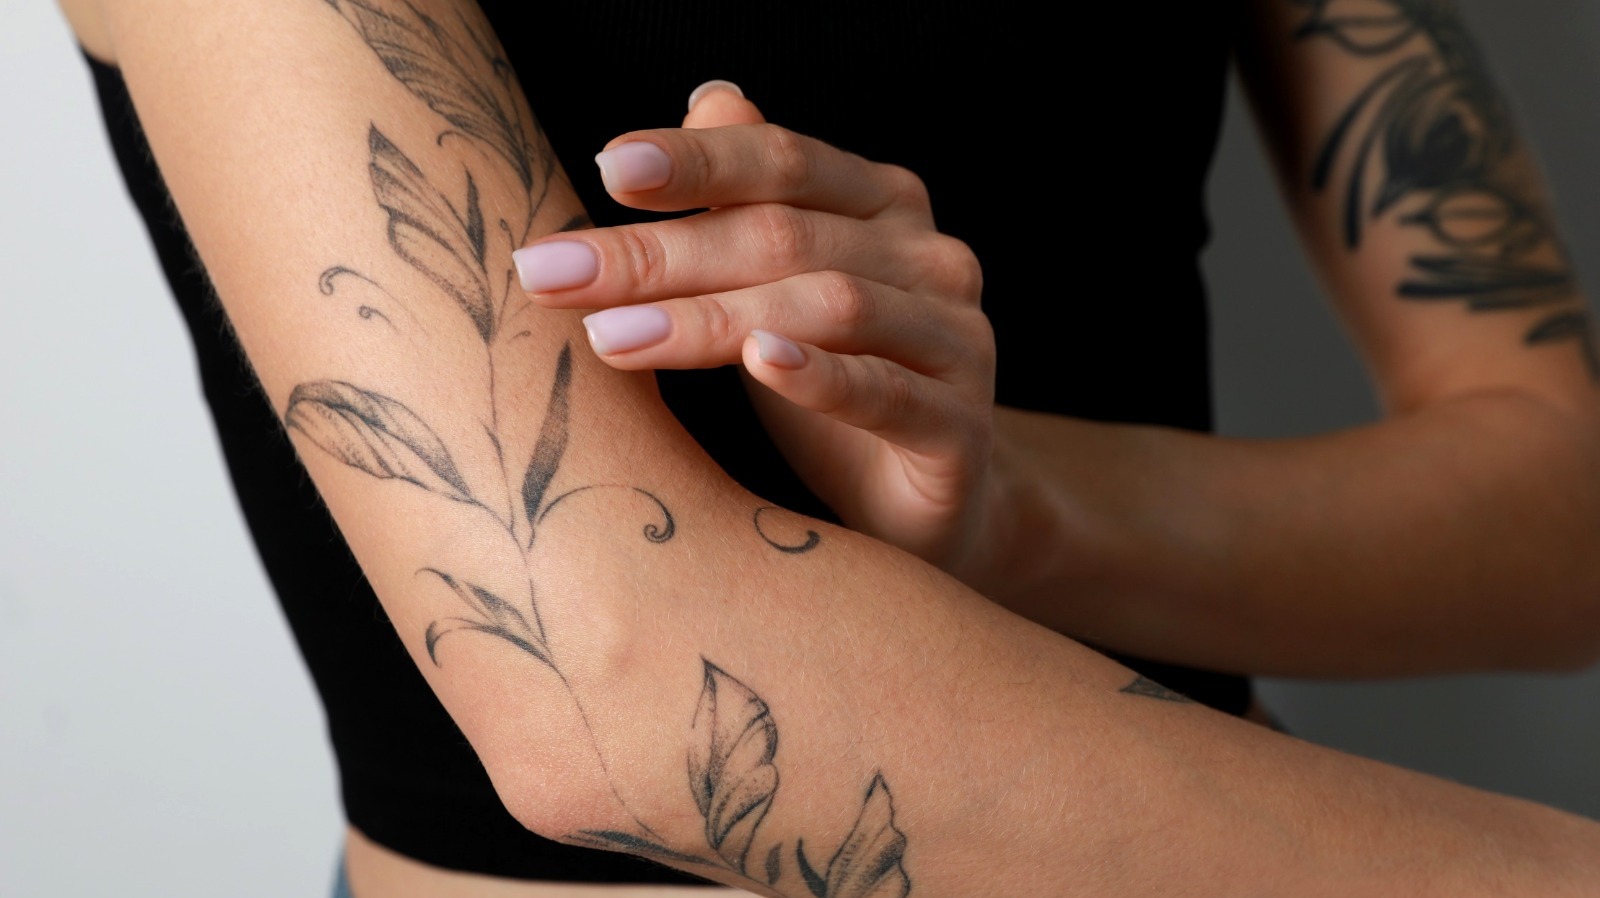 Hand swelling | Help Me Tattoo Training Forum | Tattooing 101